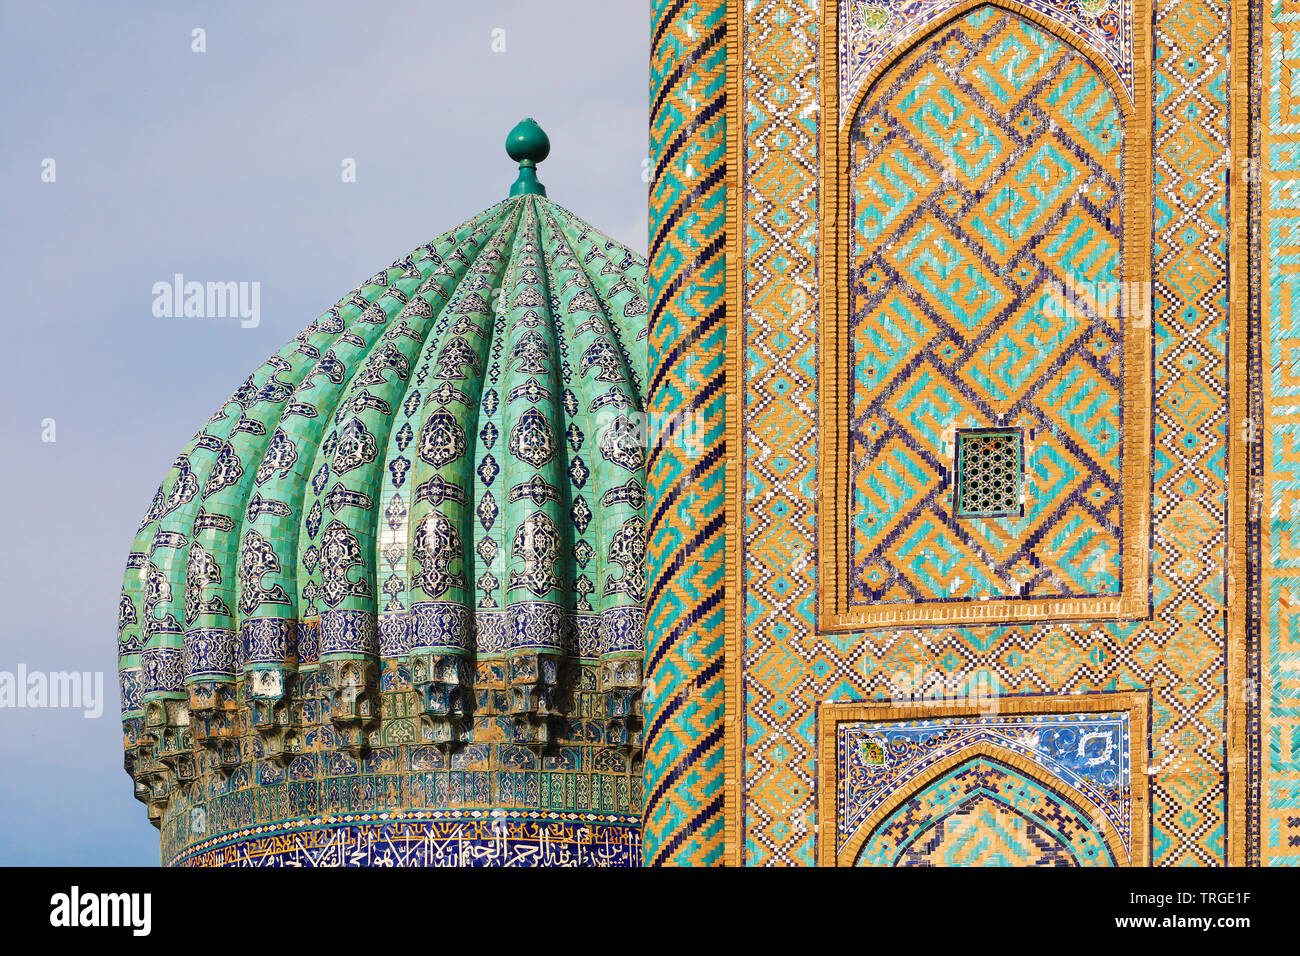 Dome and column of Sherdor madrasa in Samarkand, Uzbekistan Stock Photo